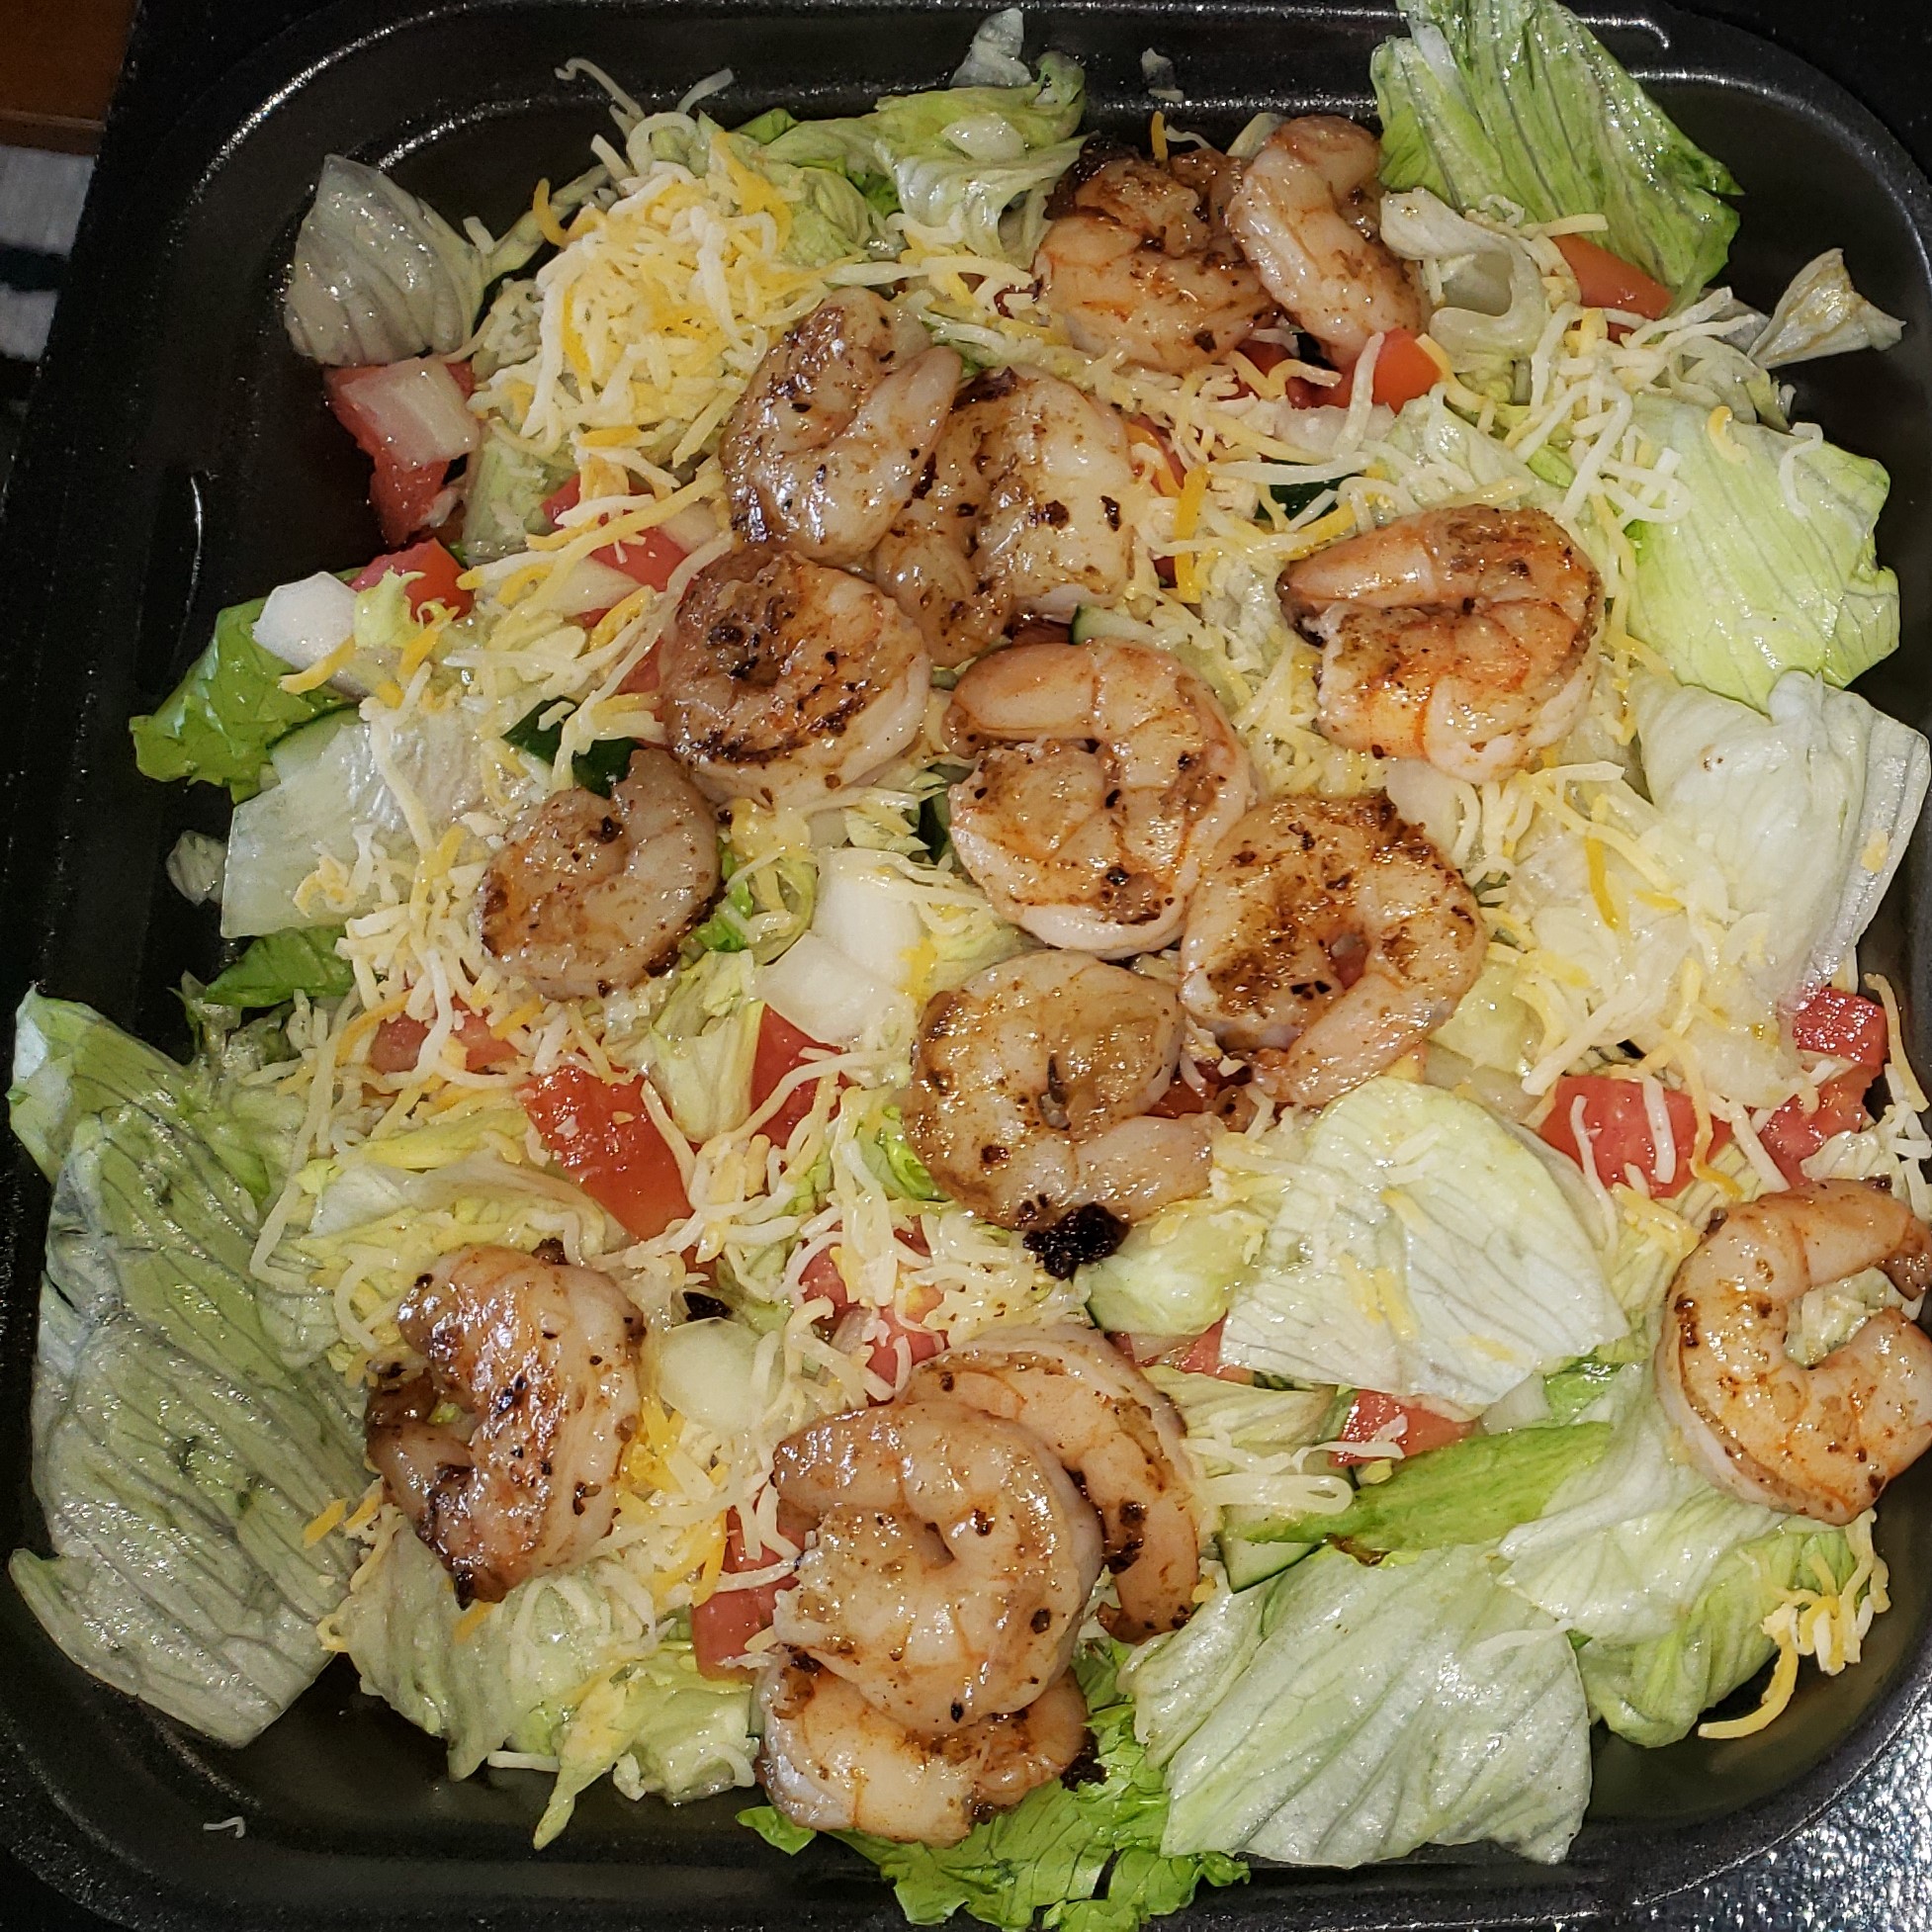 Green Salad with Grilled Shrimp - $11.45